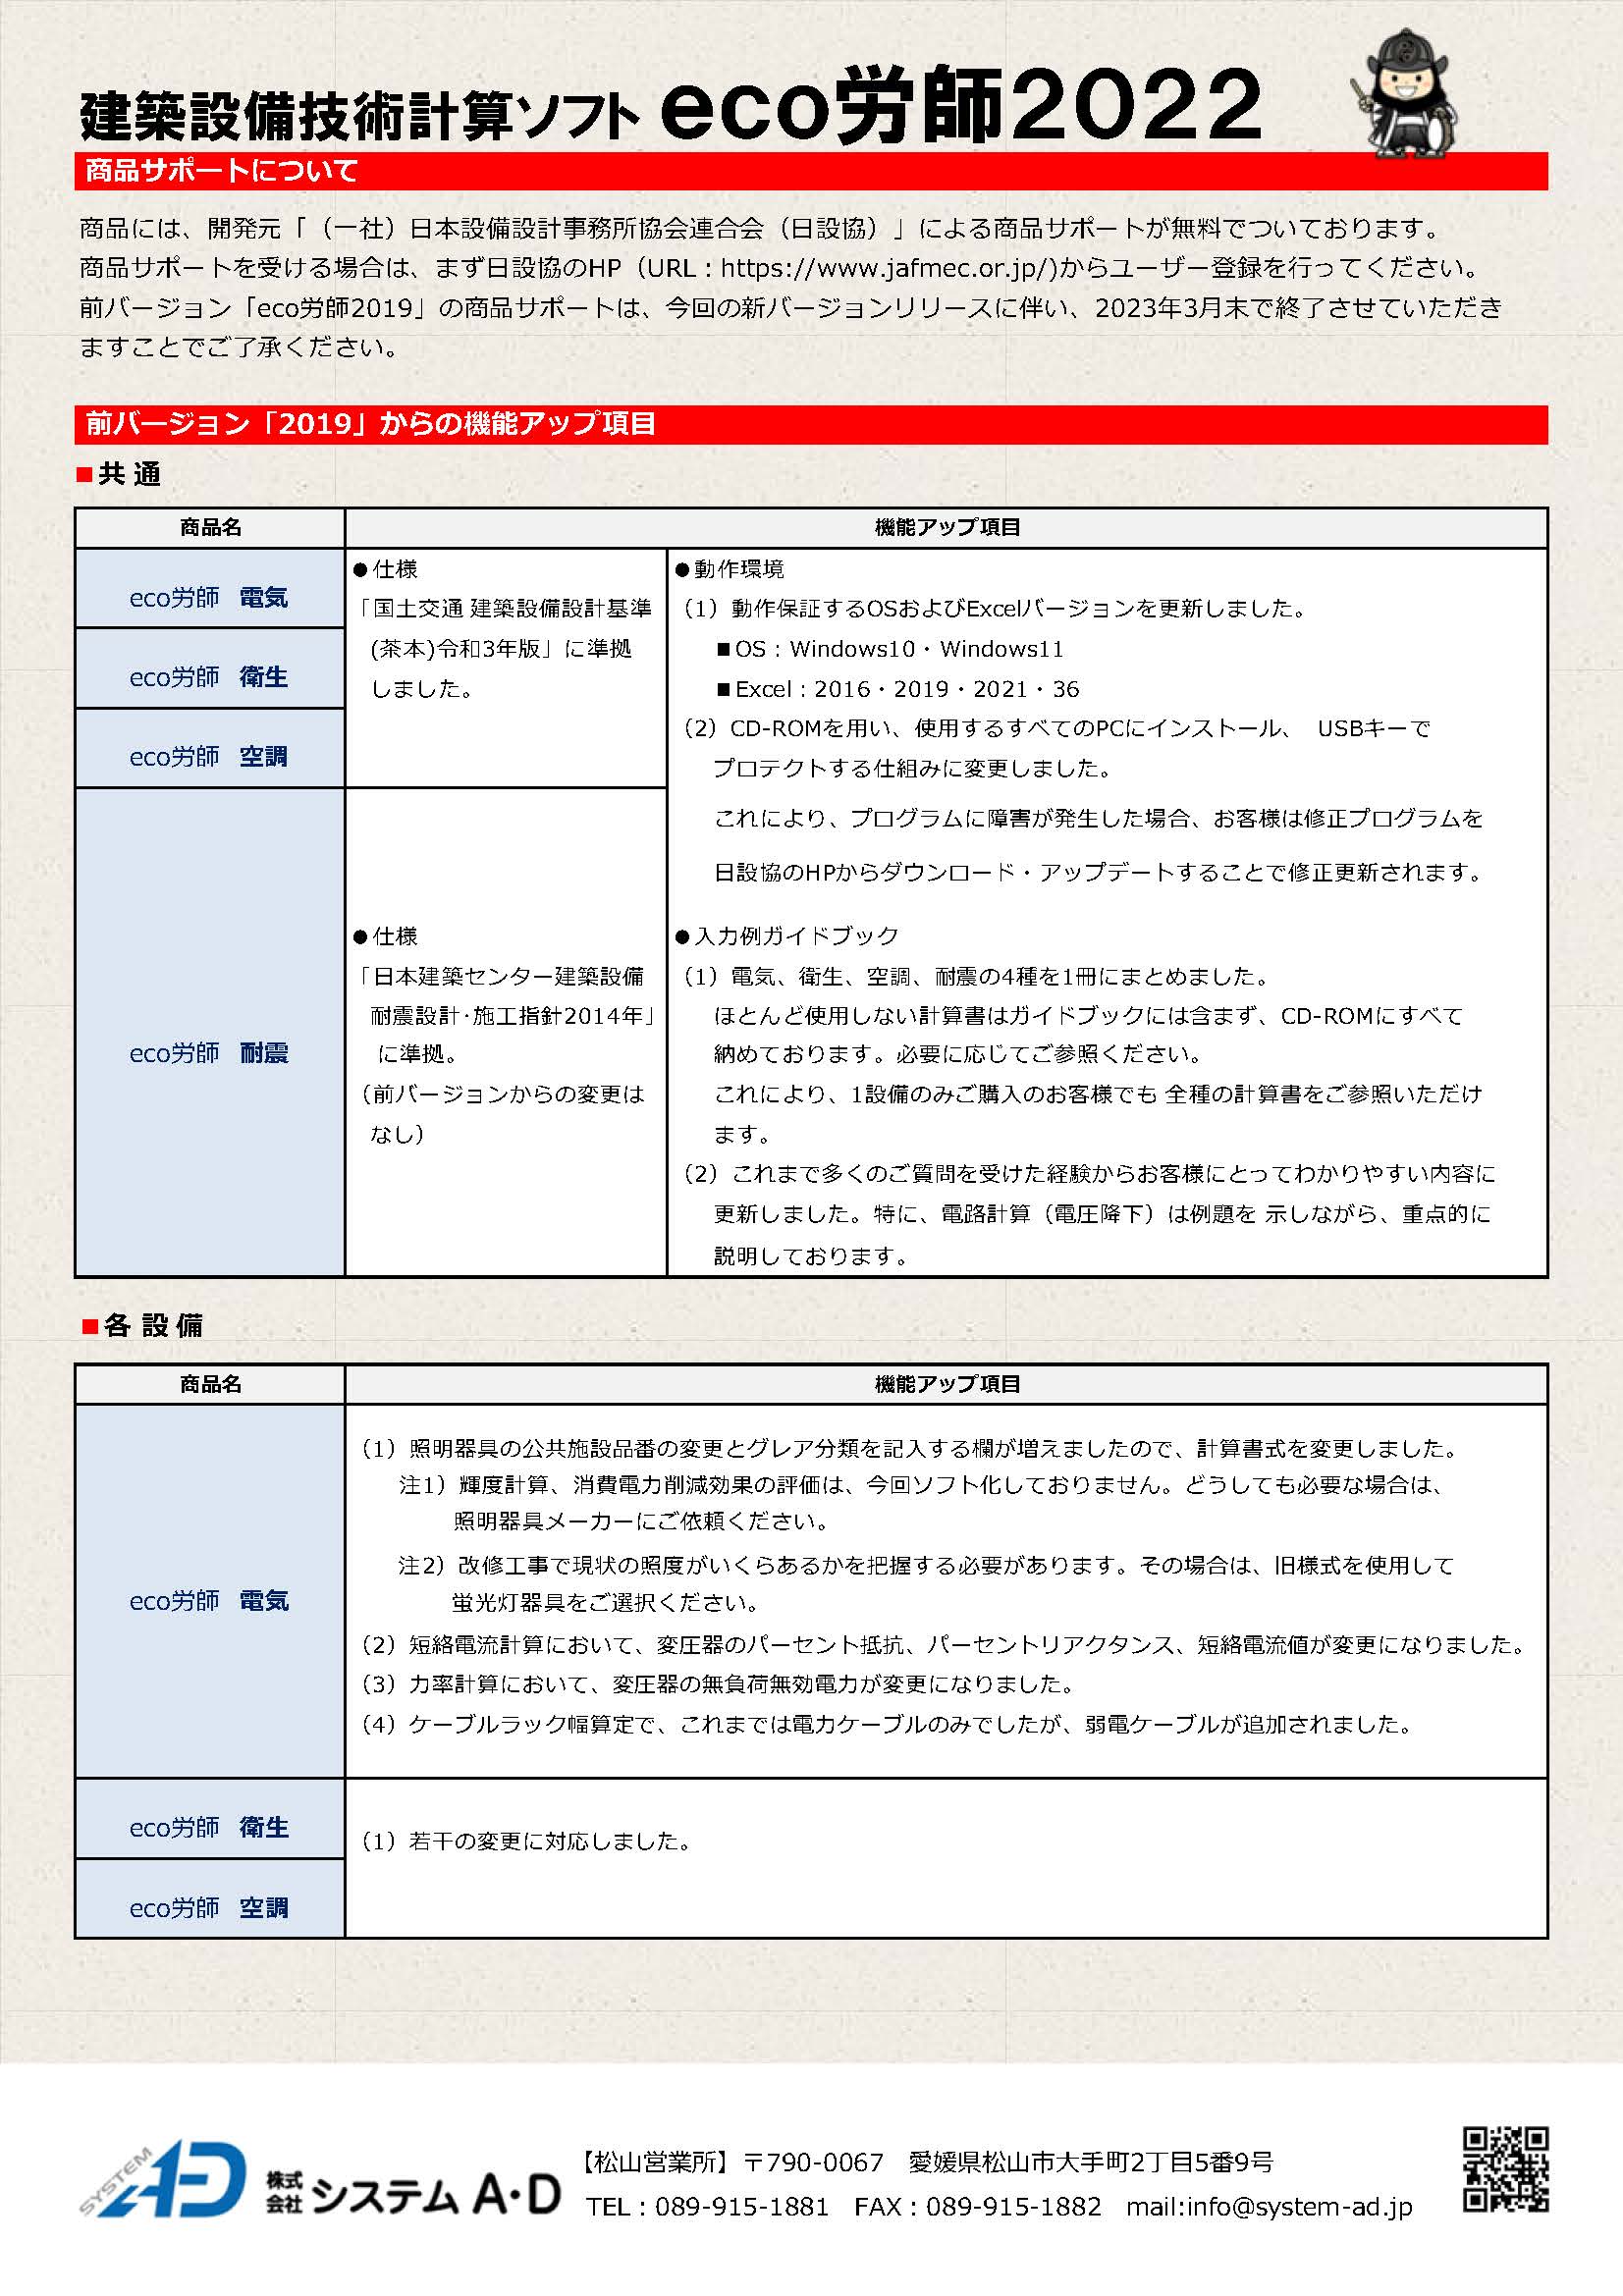 eco労師 設備用耐震計算ソフト |製品詳細|株式会社システムA・D|愛媛県